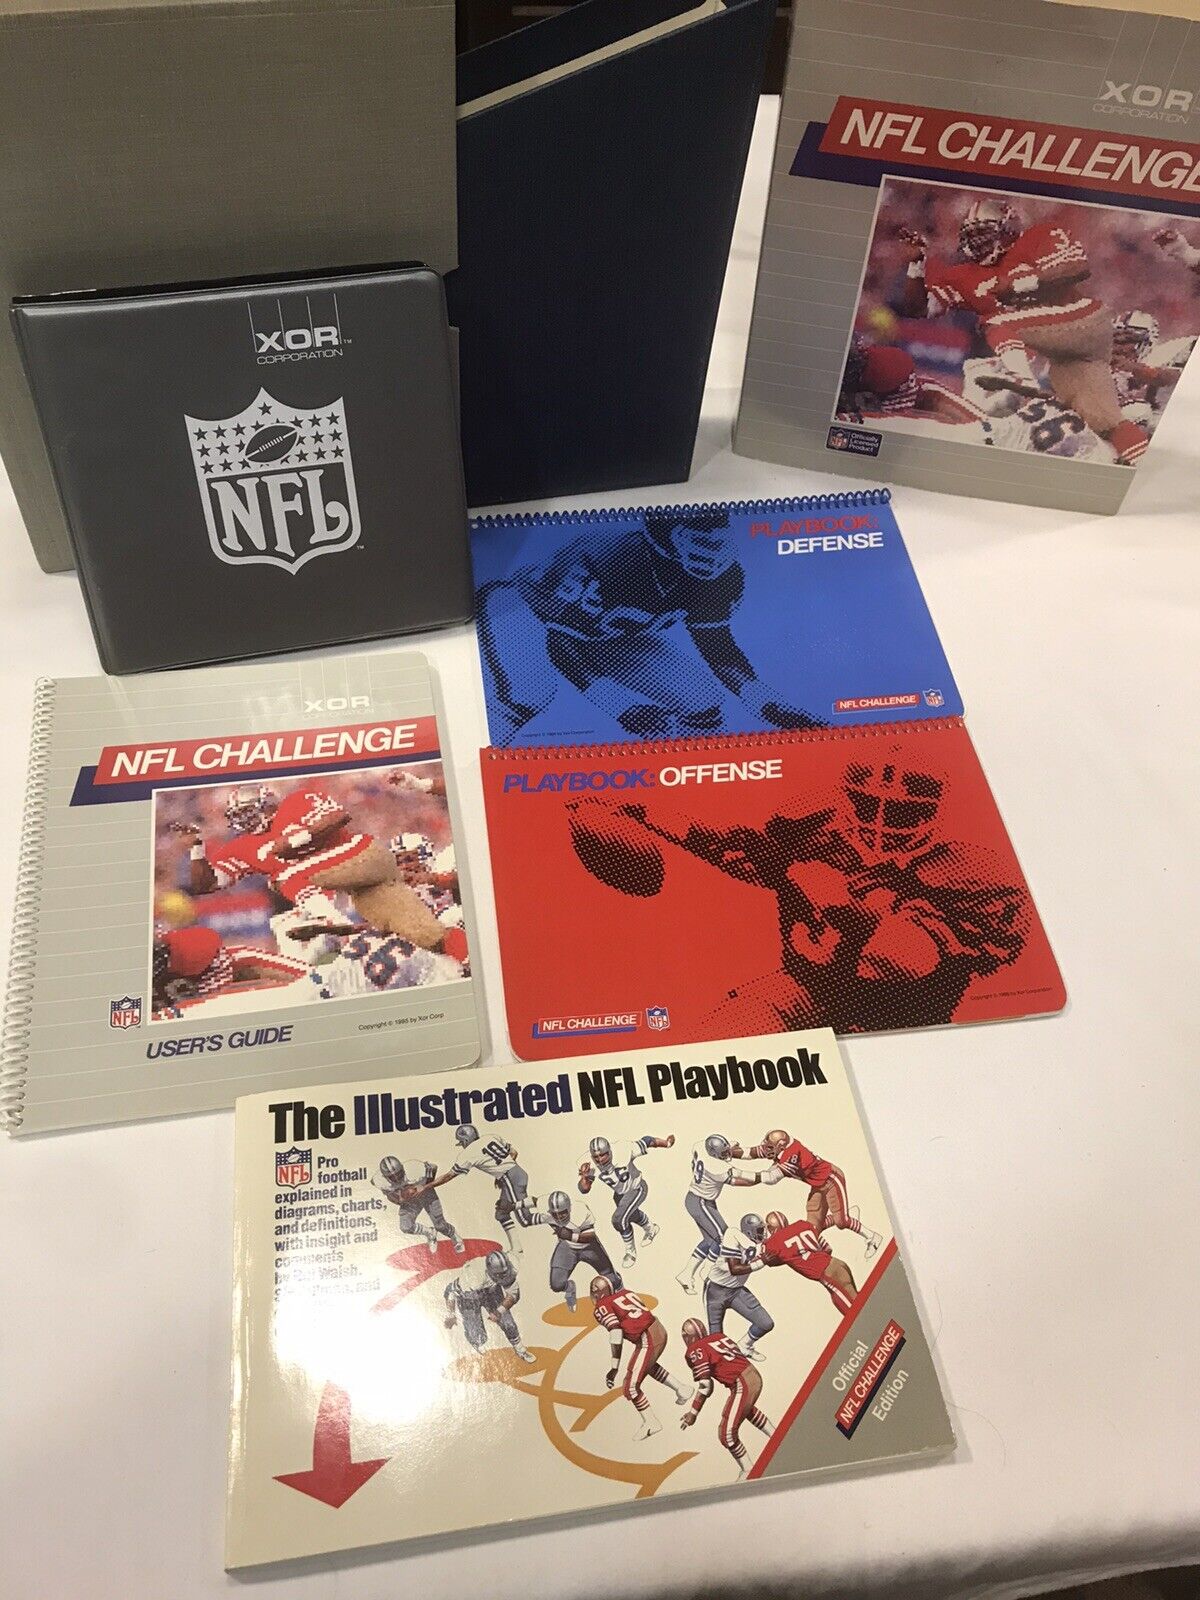 IBM PC Game 1985 NFL Challenge XOR Complete Box, Disks, Manuals, Playbook